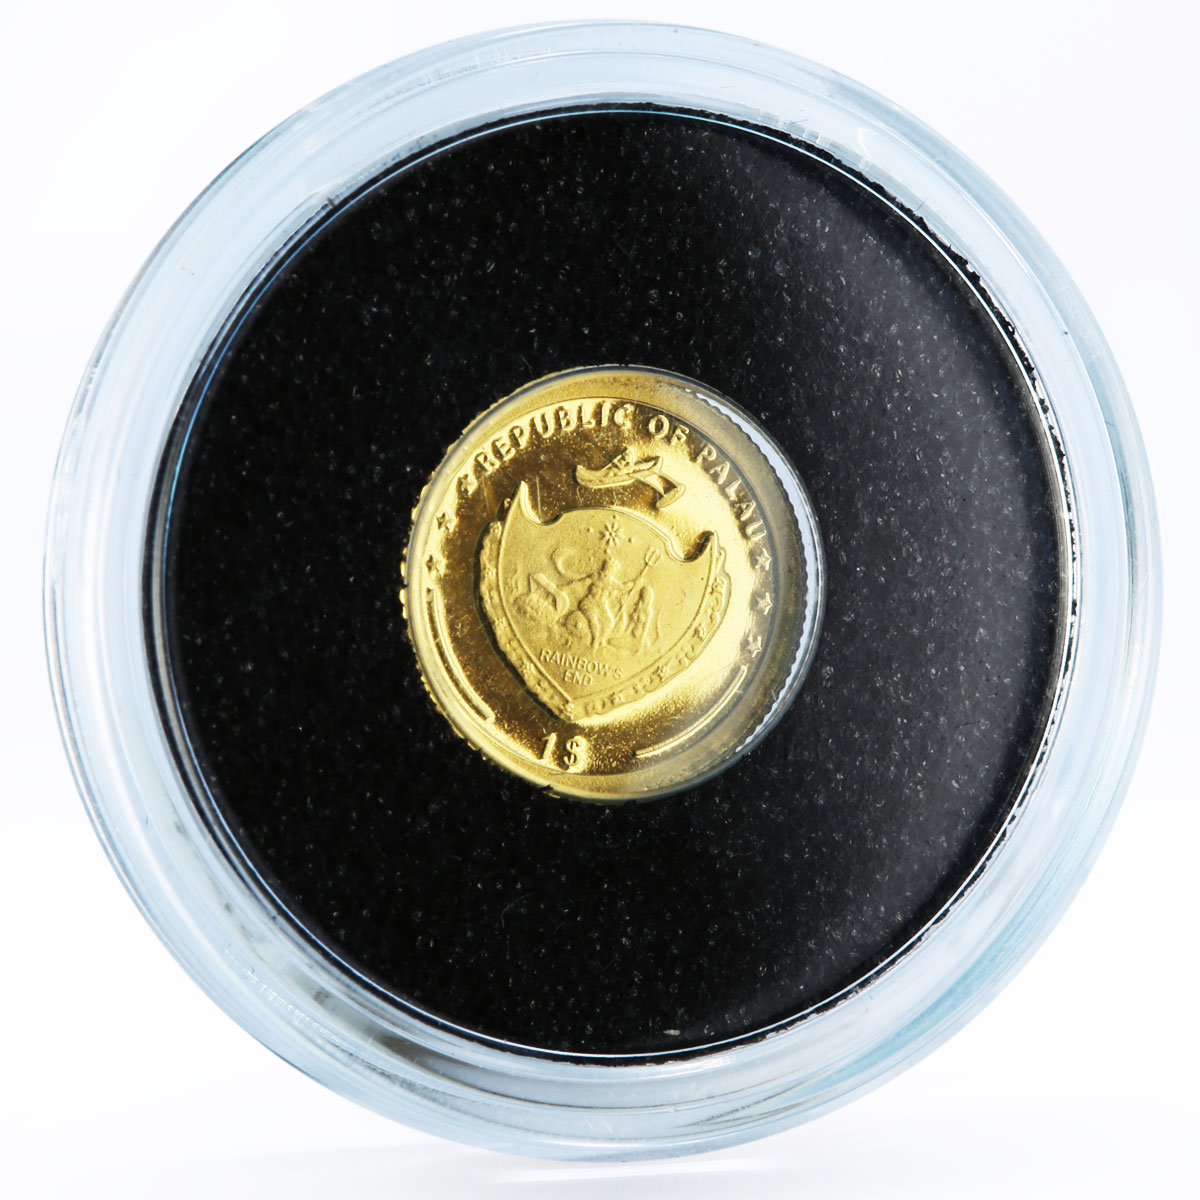 Palau 1 dollar History of Seafaring Pamir Ship Clipper proof gold coin 2009